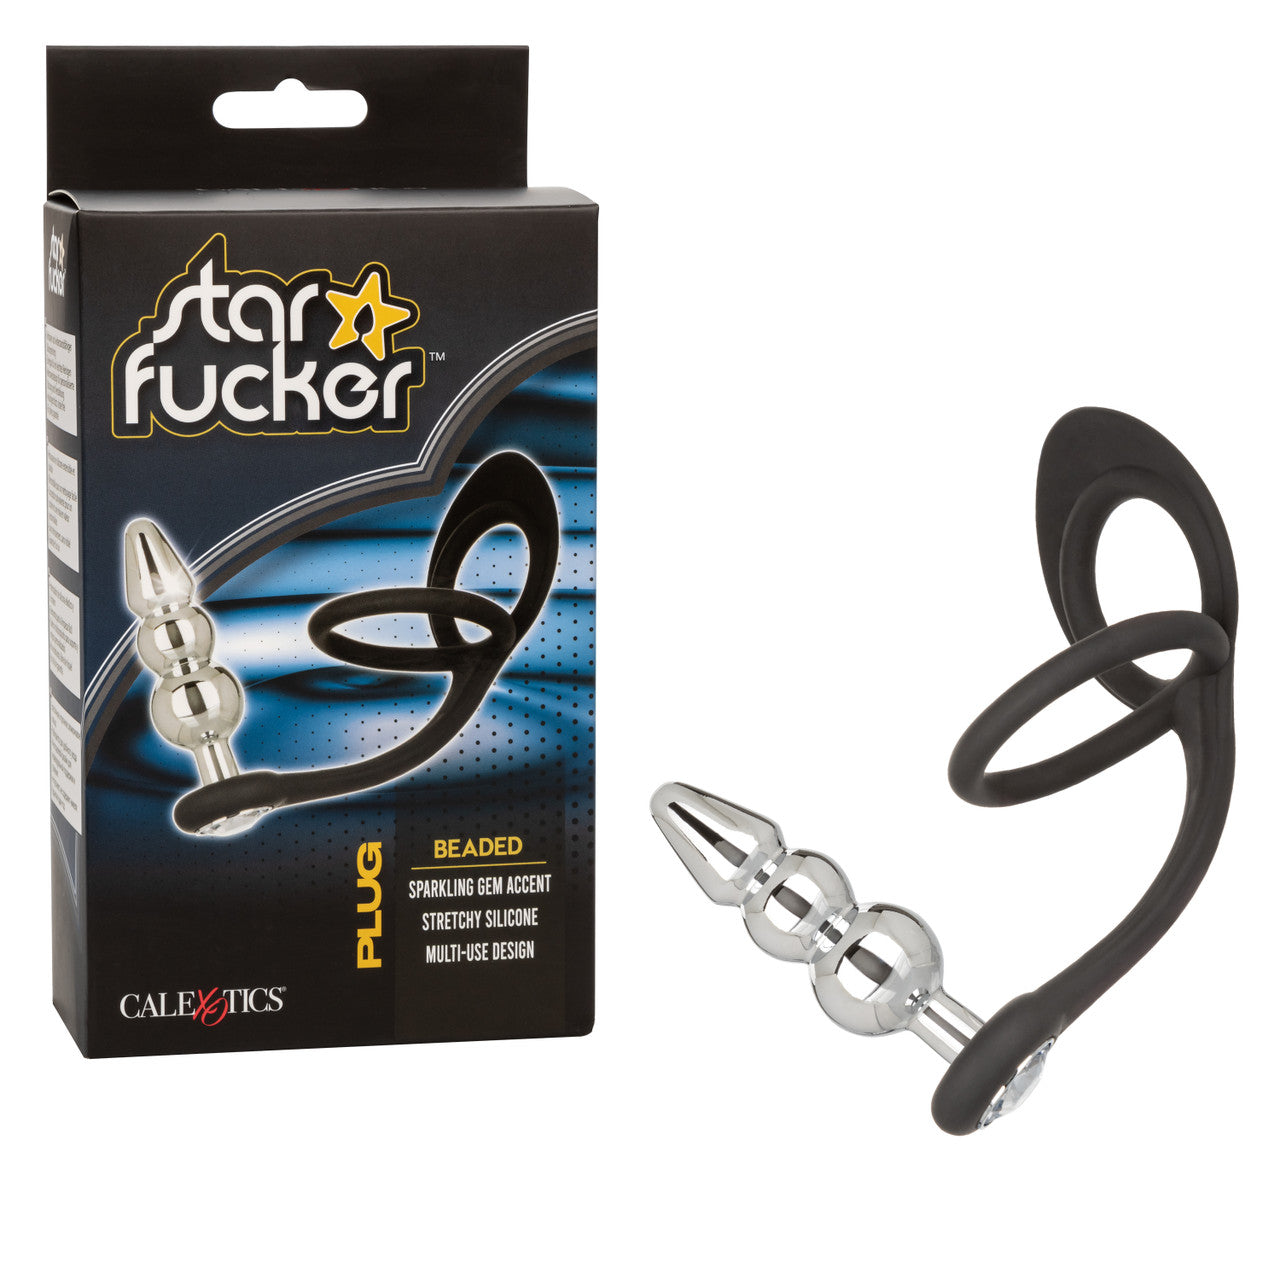 Star Fucker Beaded Plug - Thorn & Feather Sex Toy Canada